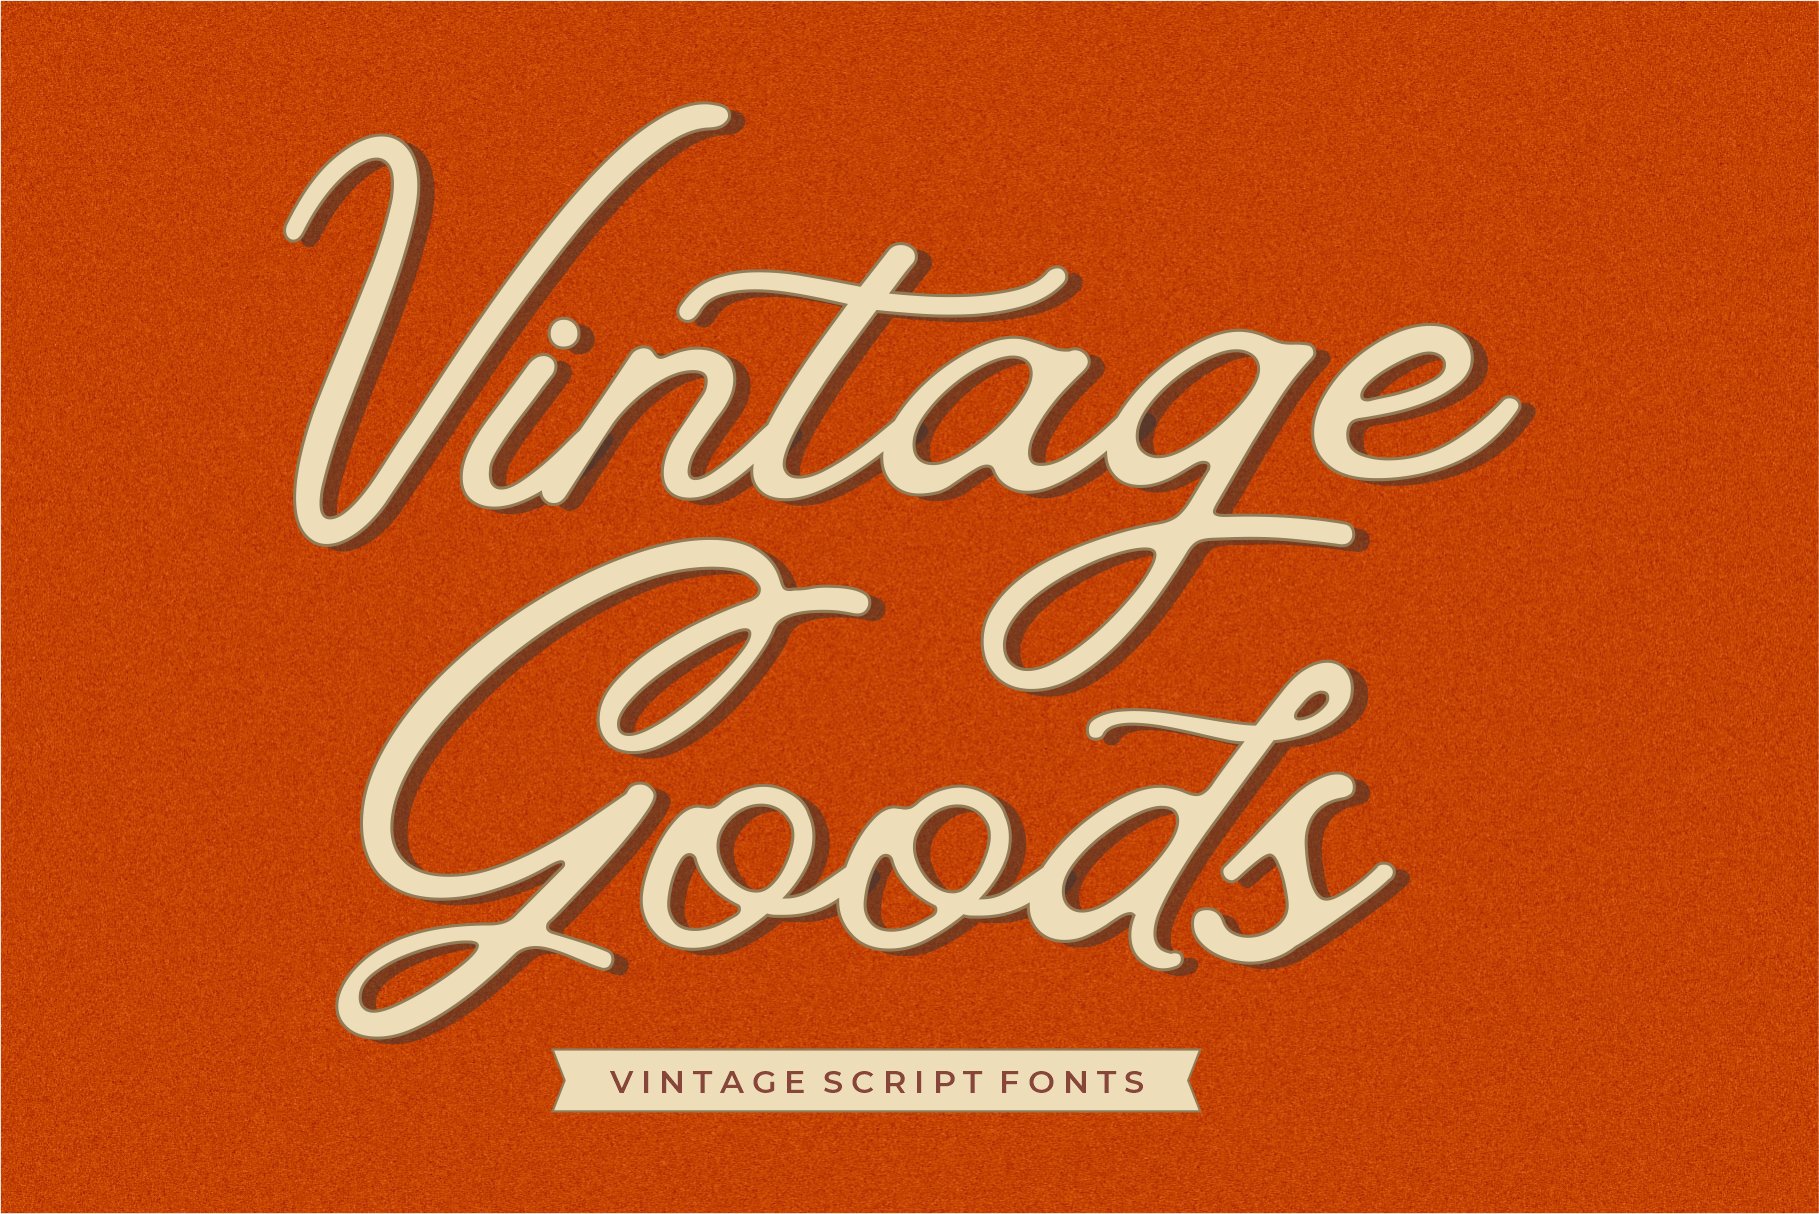 Vintage Goods Script cover image.